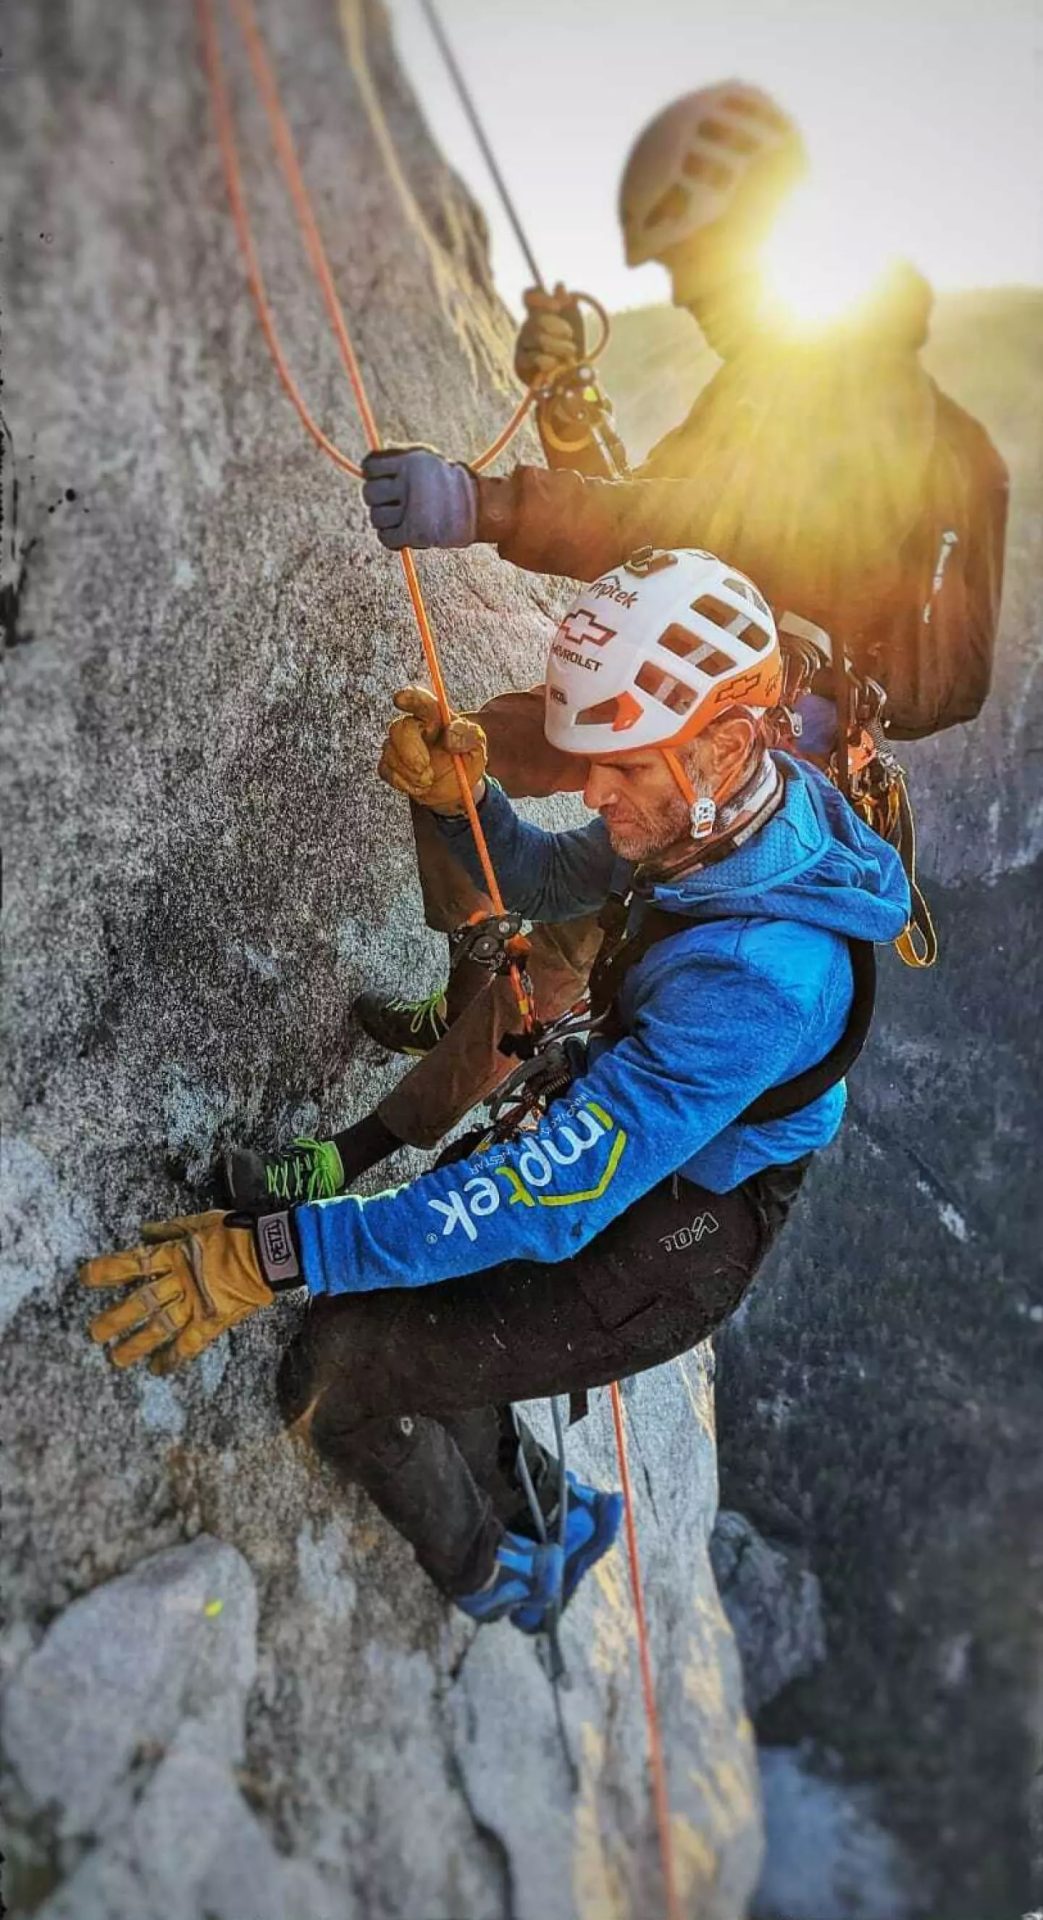 Paraplegic scaling El Capitan